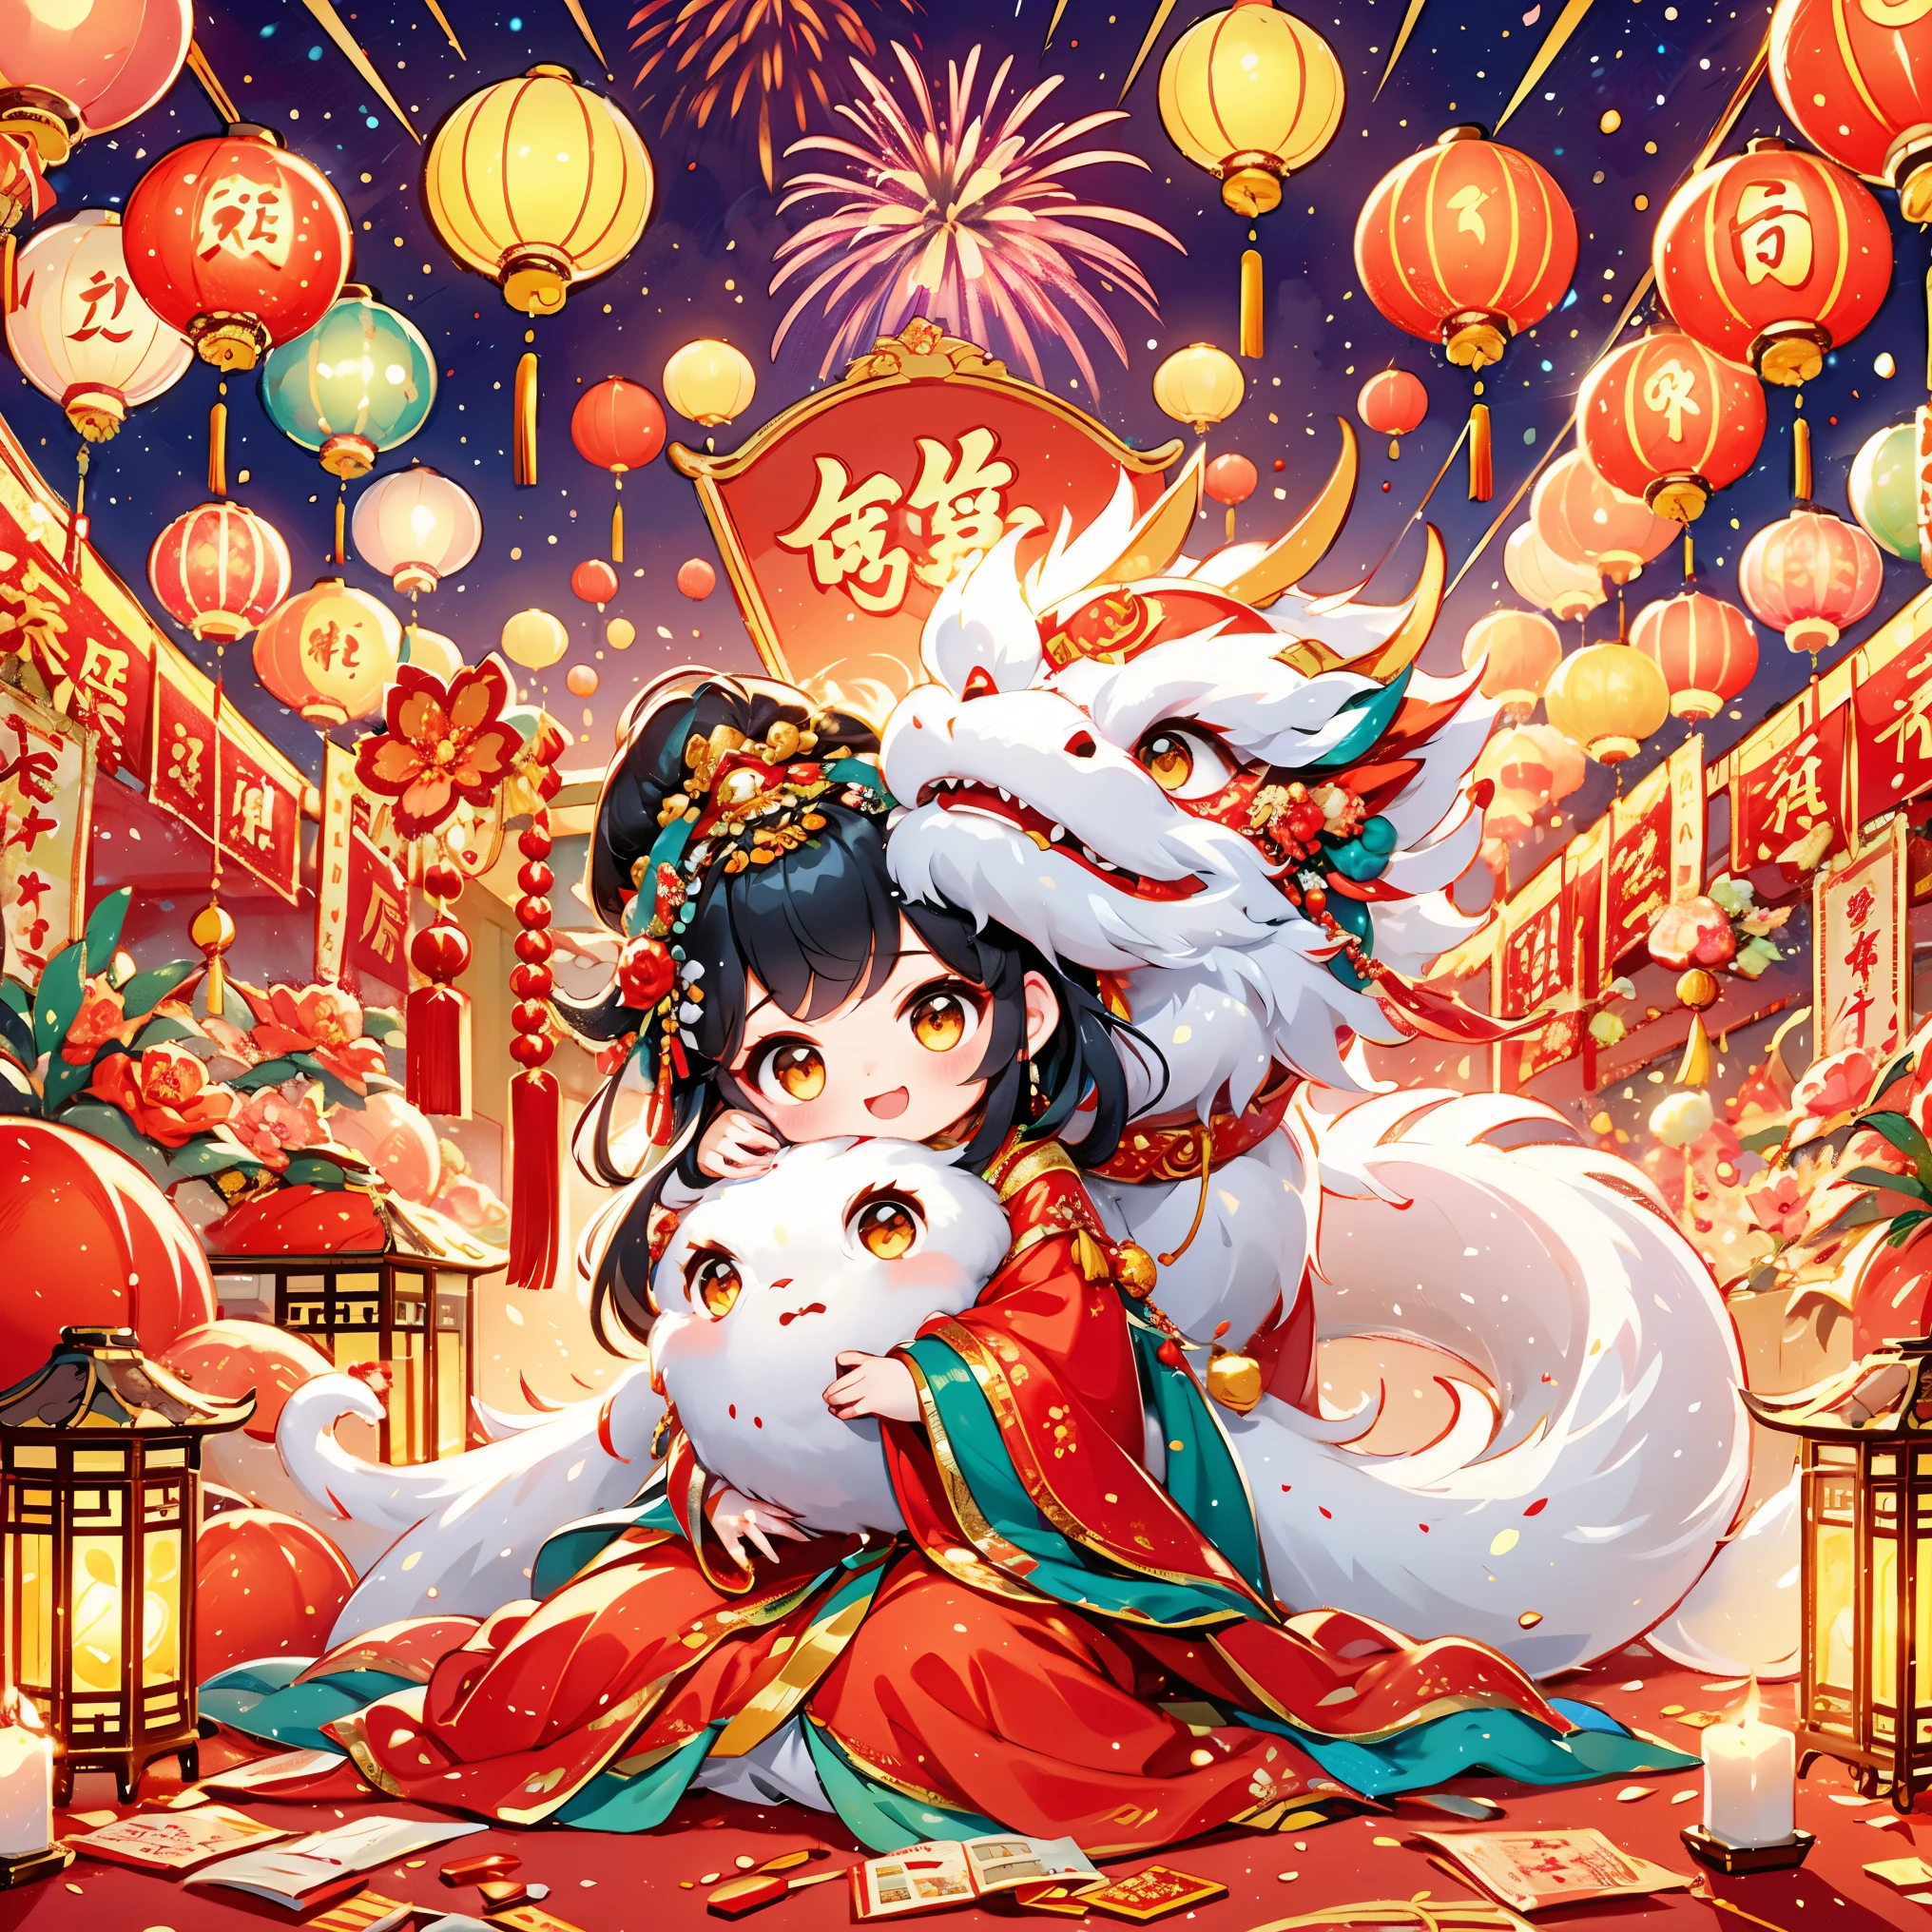 1 girl hugging น่ารัก little มังกรจีน, เจ้าหญิงน้อยของจีน, มังกรจีน, น่ารัก, งานเทศกาล, ตรุษจีน, วันปีใหม่จีน, ประทัด, ดอกไม้ไฟ, โคมไฟ